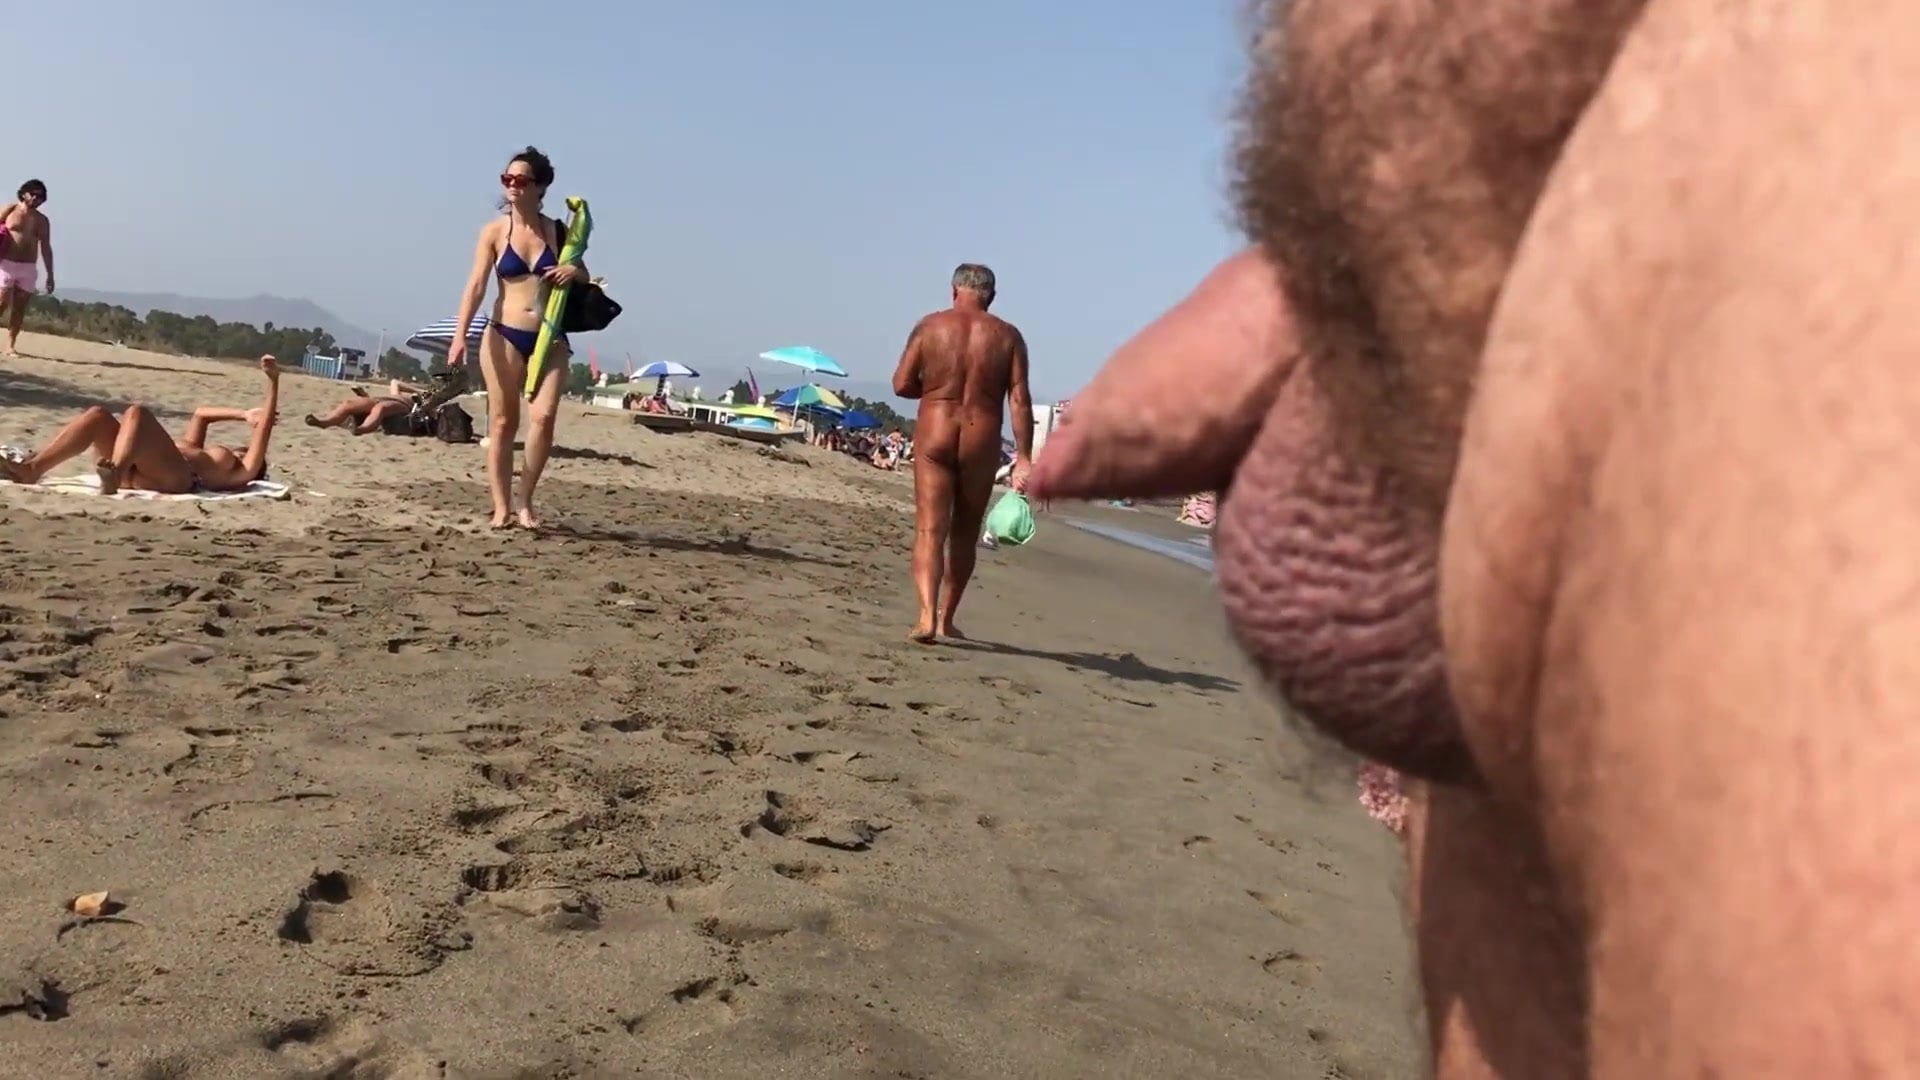 Nude beach handjob from asian good